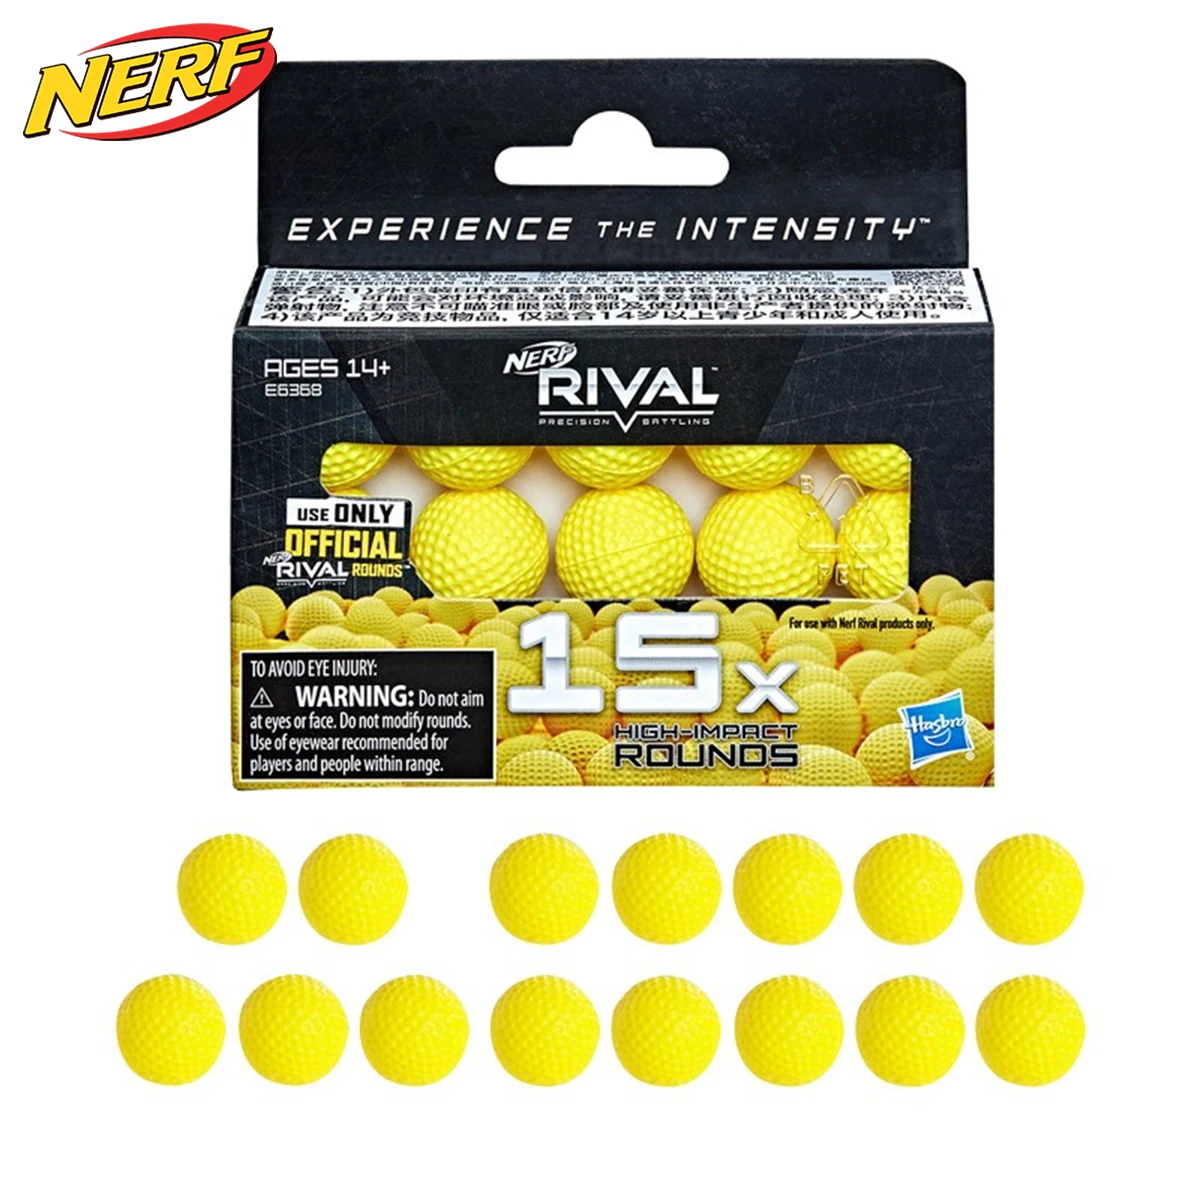 100X Foam Refill Ammo Balls For Nerf Rival Blasters Bullet Balls Rounds Toys UK 